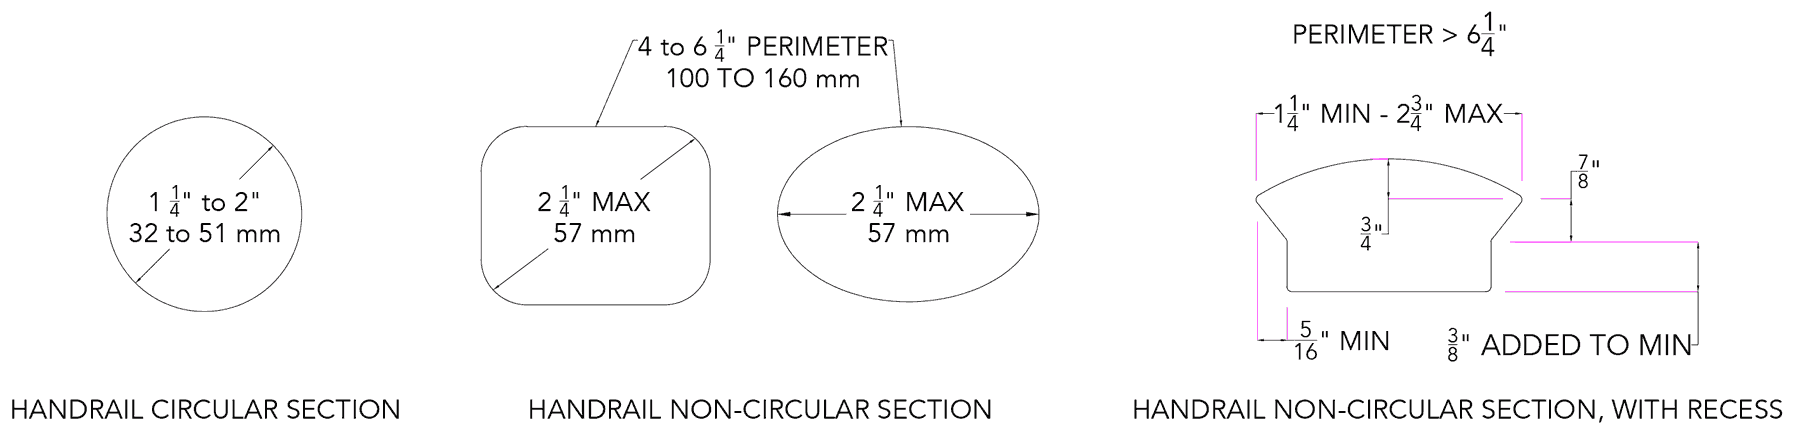 handrail circular and non-circular cross sections